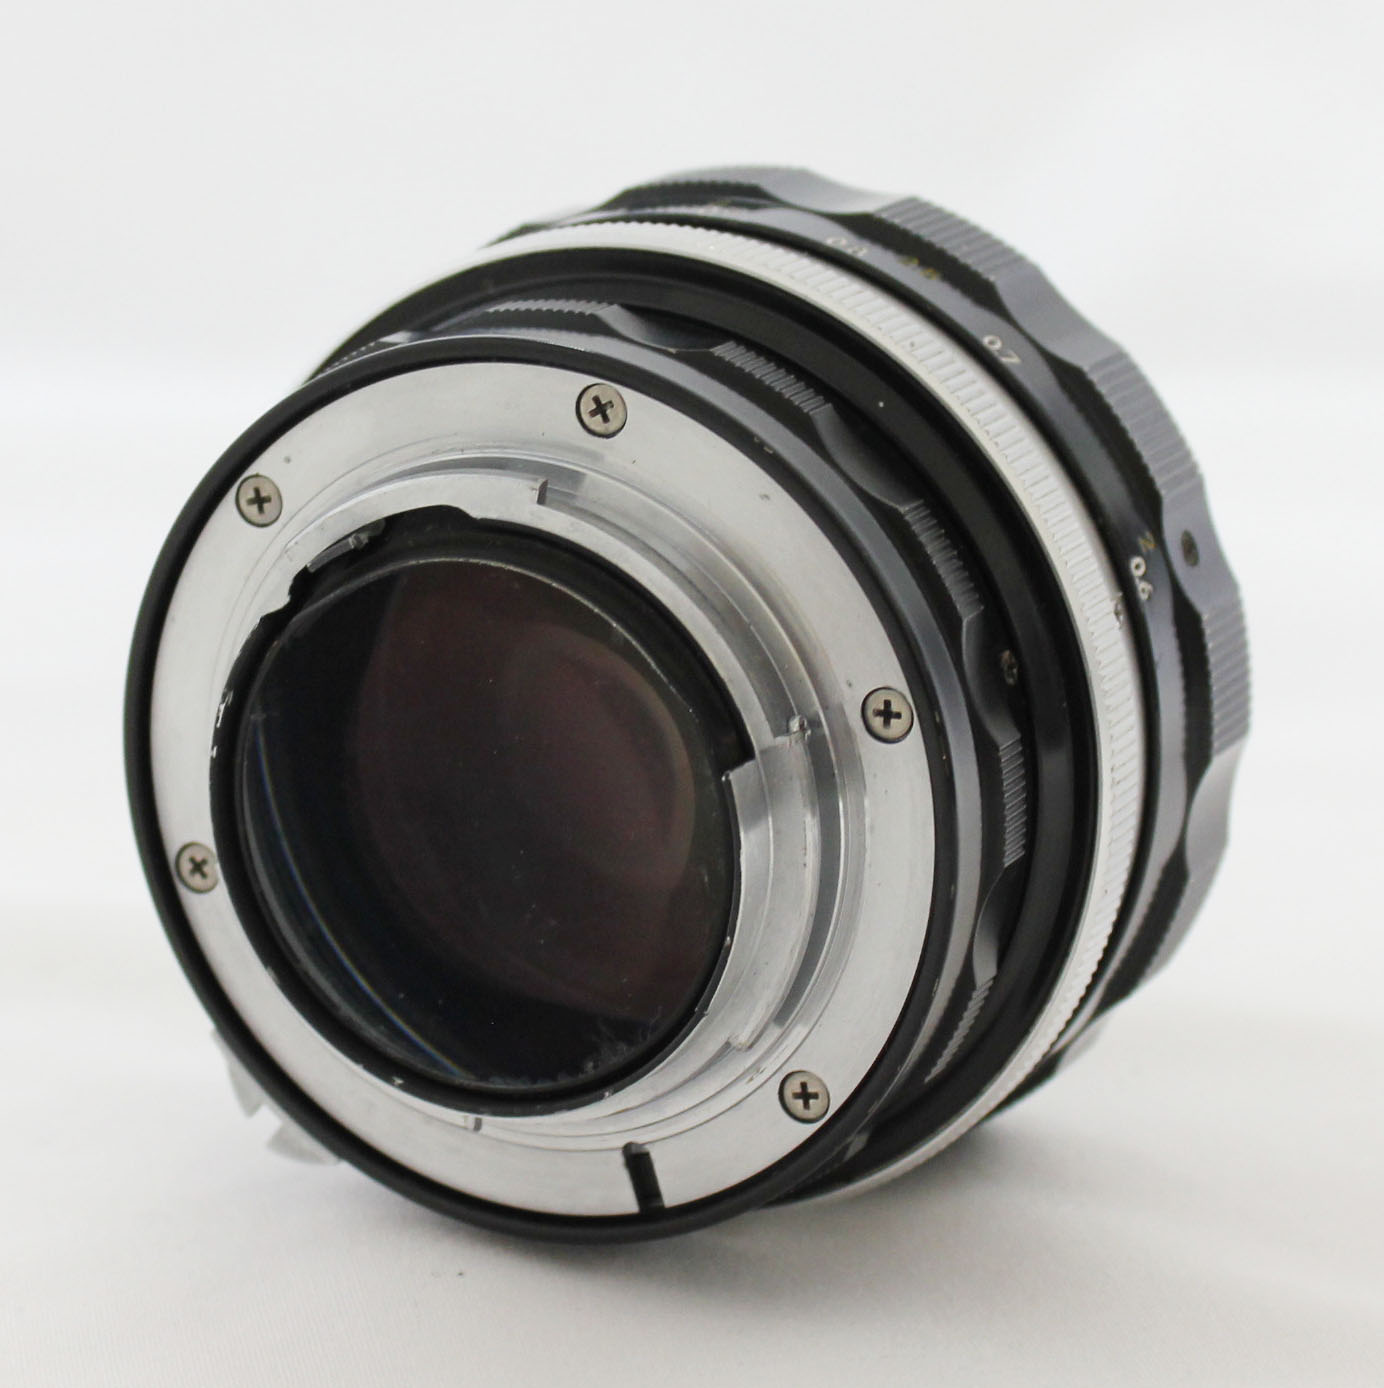 Nikon Nikkor S.C SC Auto 55mm F/1.2 Non-Ai MF Prime Lens from 